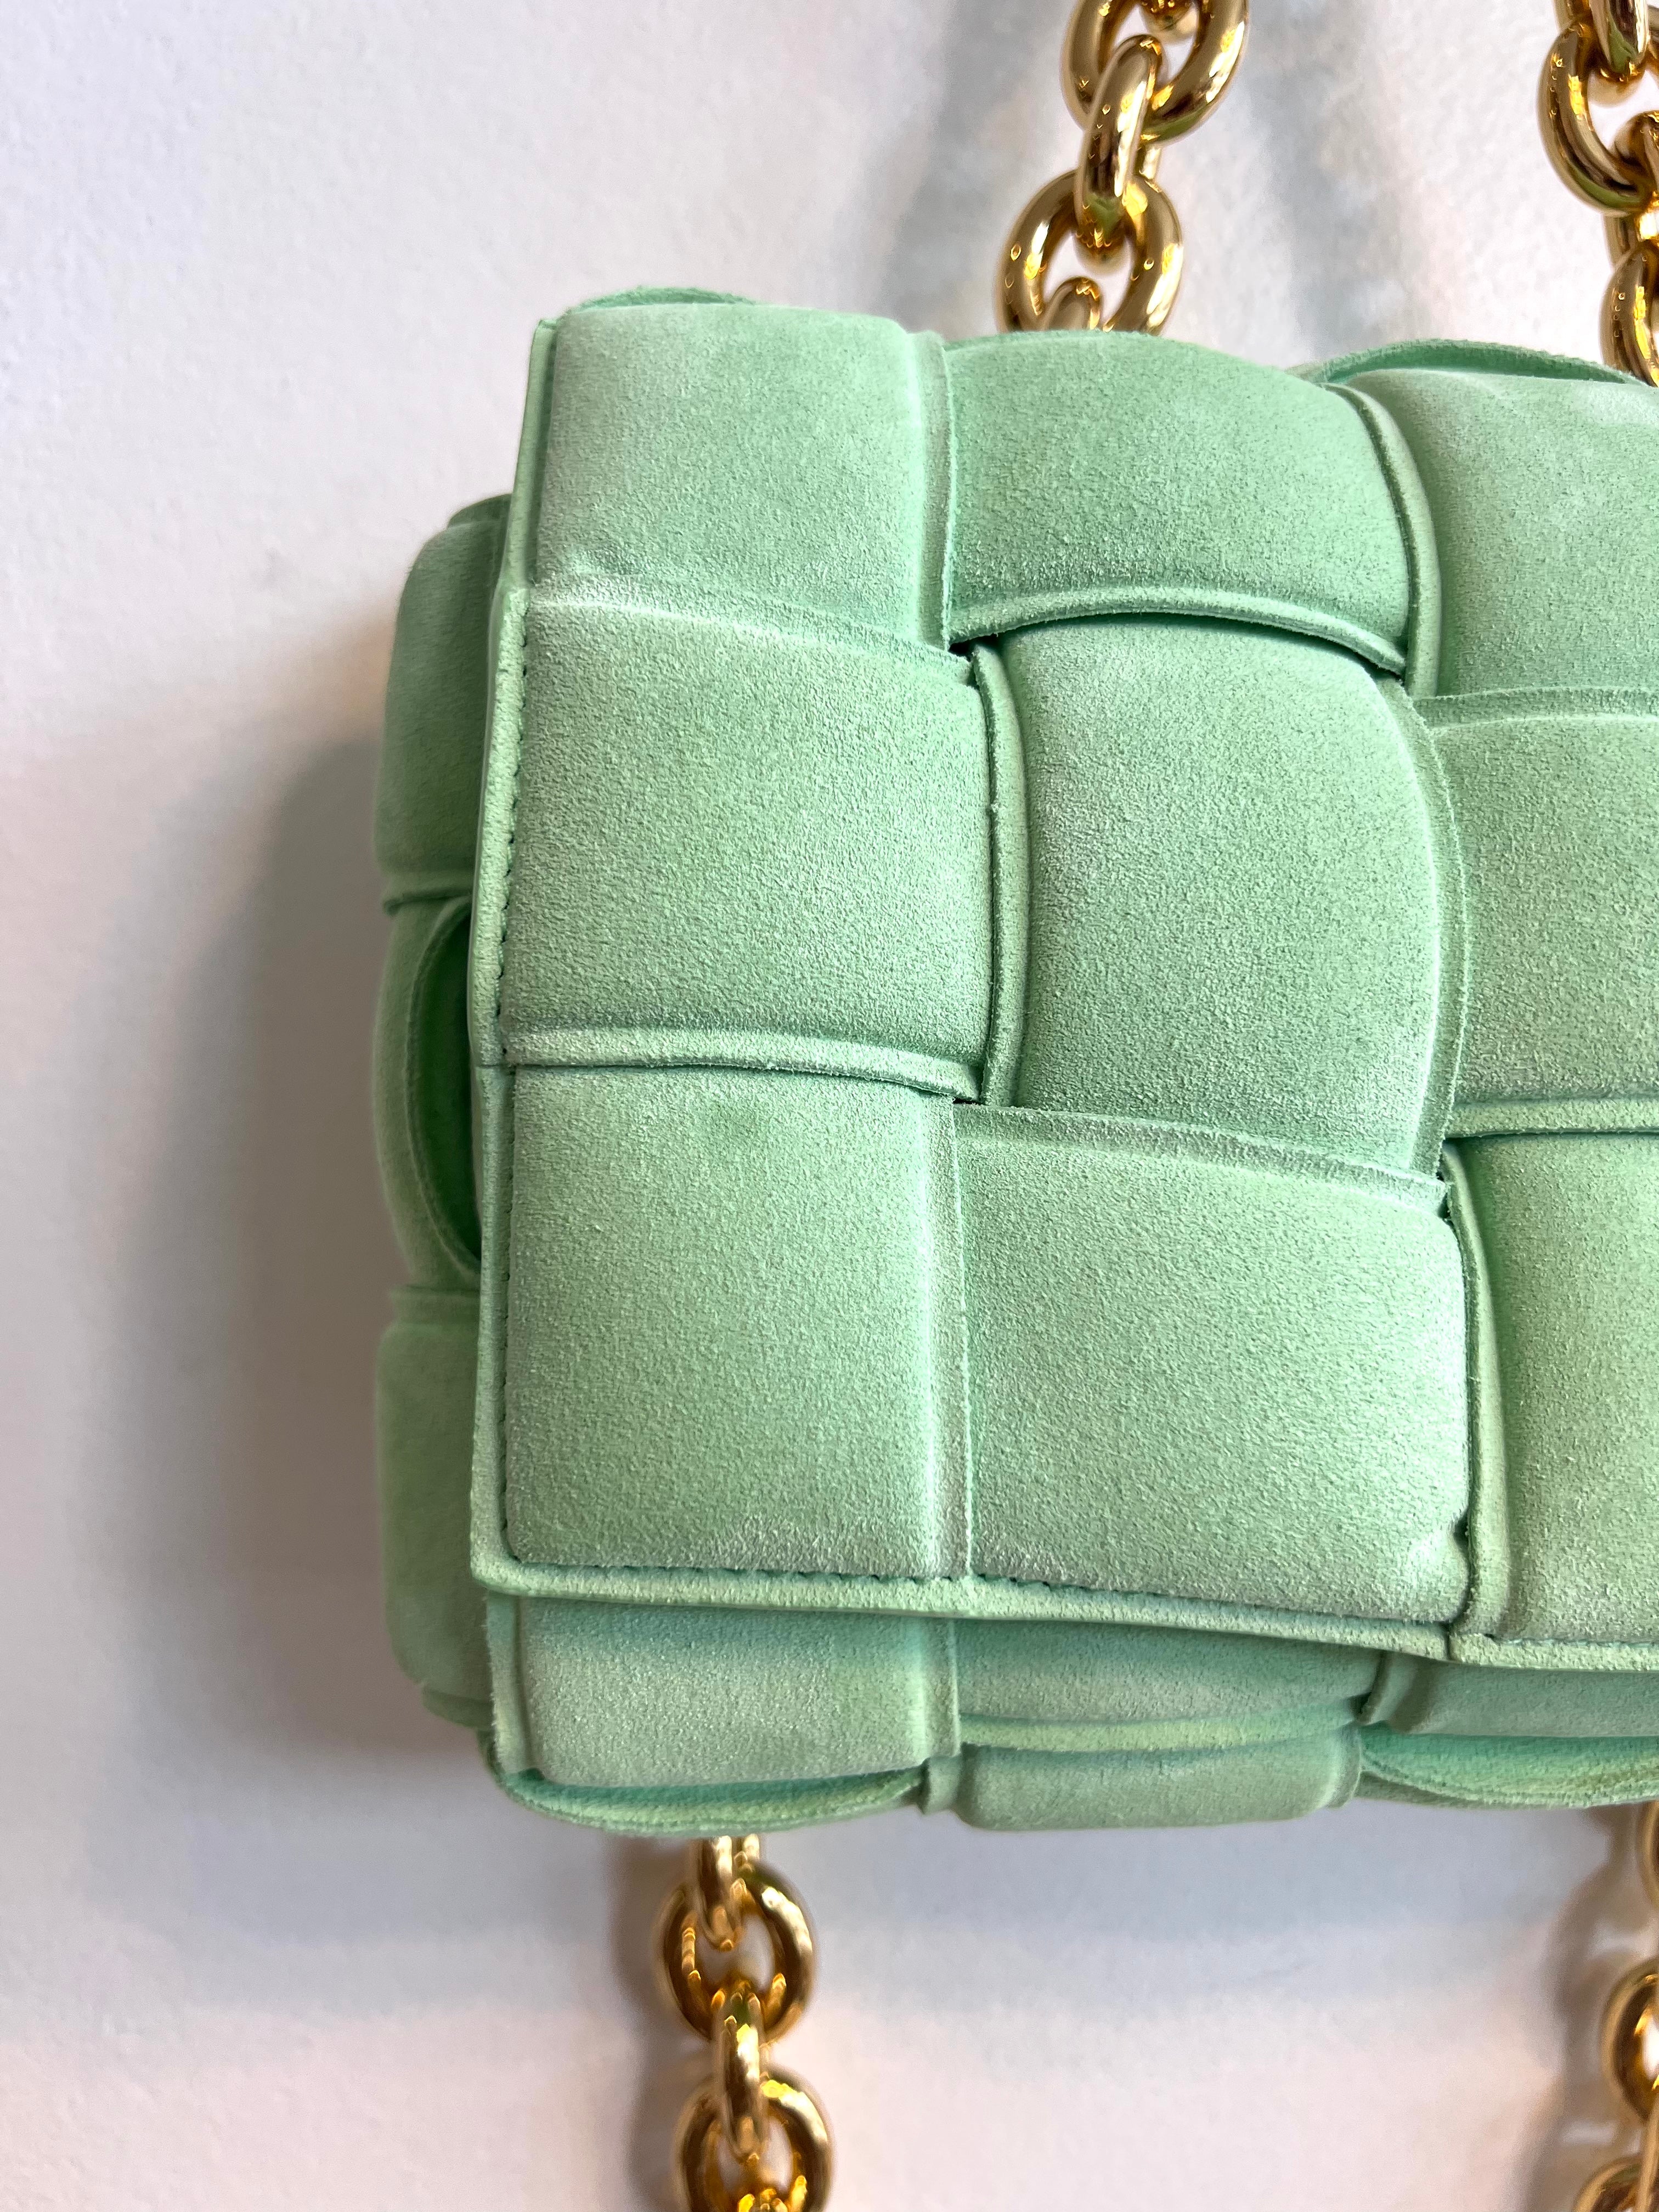 Bottega Veneta Green Suede Chain Cassette Bag